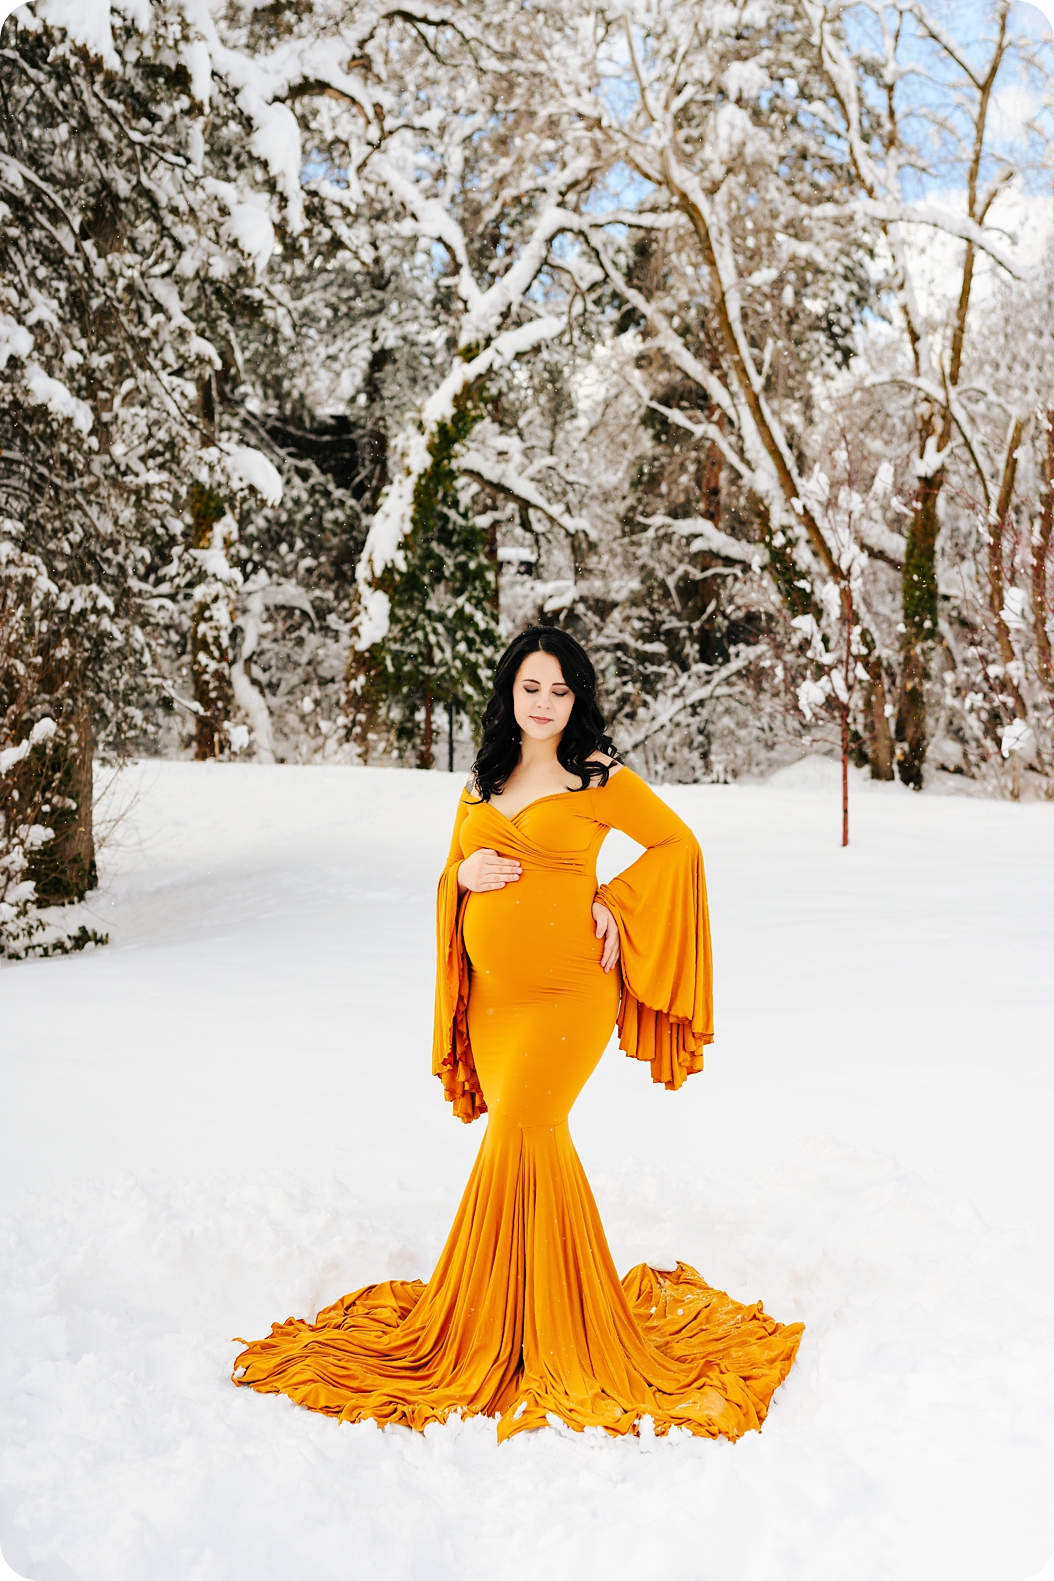 Winter Maternity Portraits in the Snow | {Beka Price Photography | Salt Lake City Maternity Photographer}